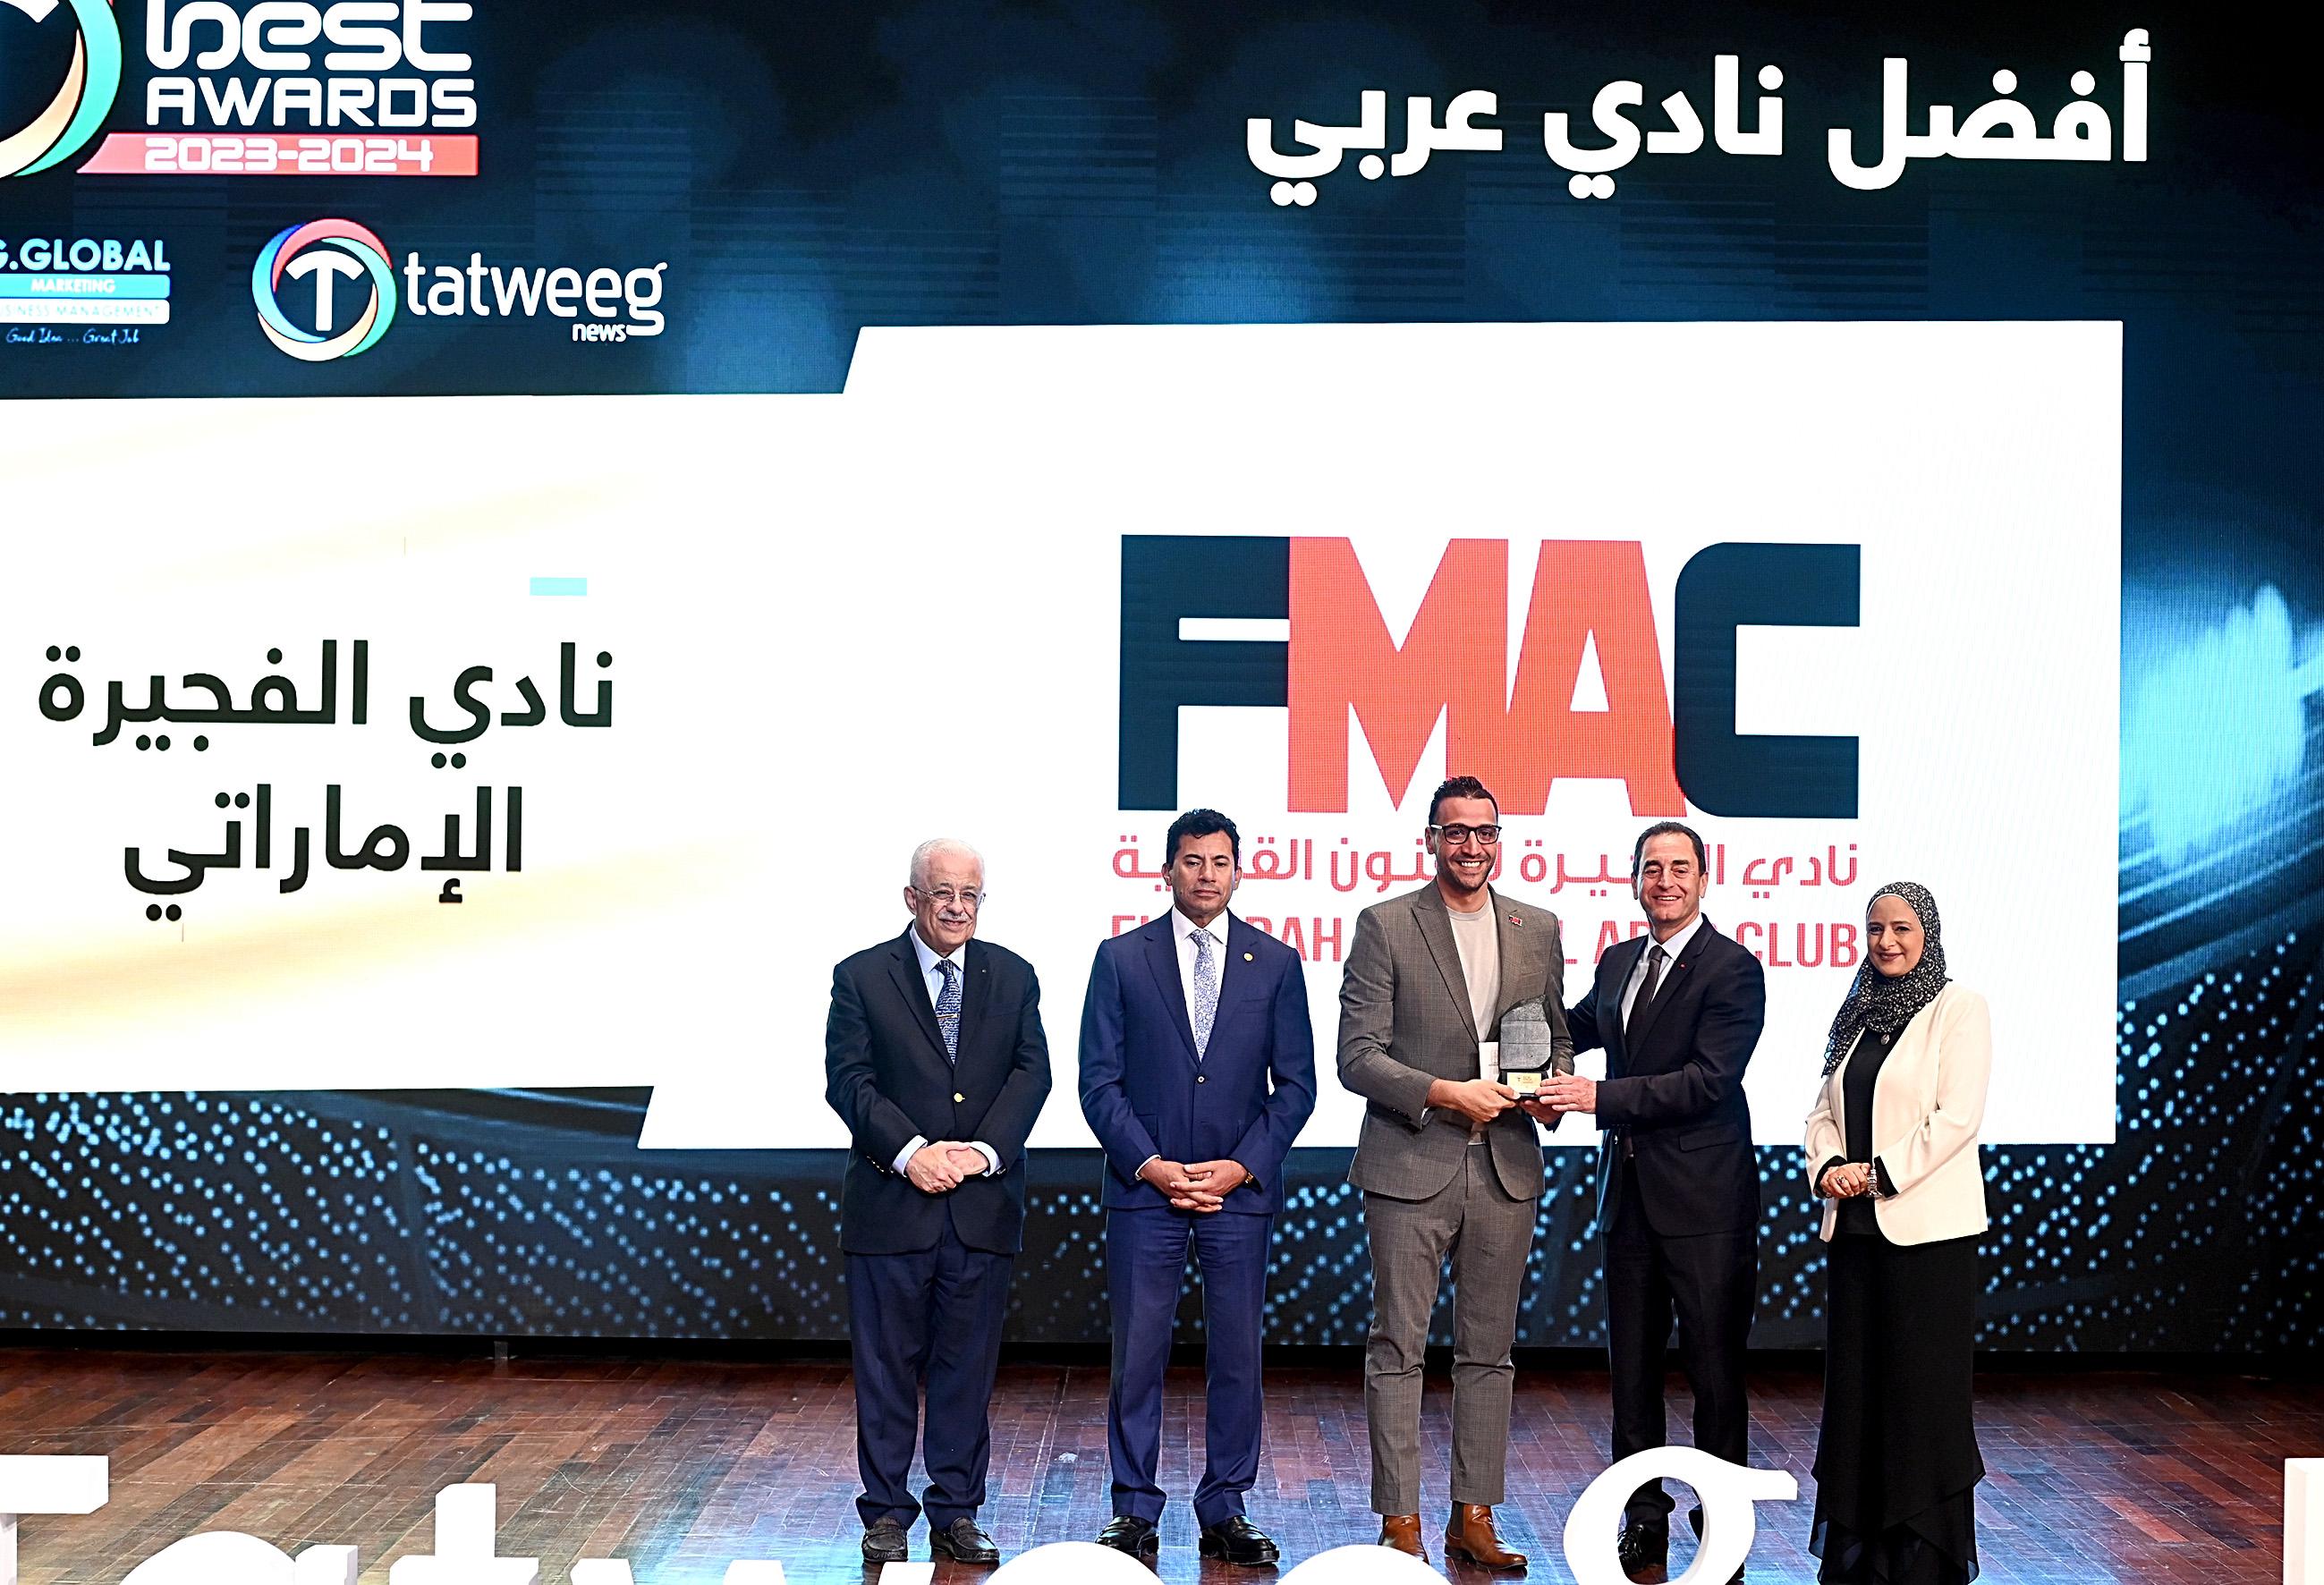 fujairah martial arts club win best arab club award for second time